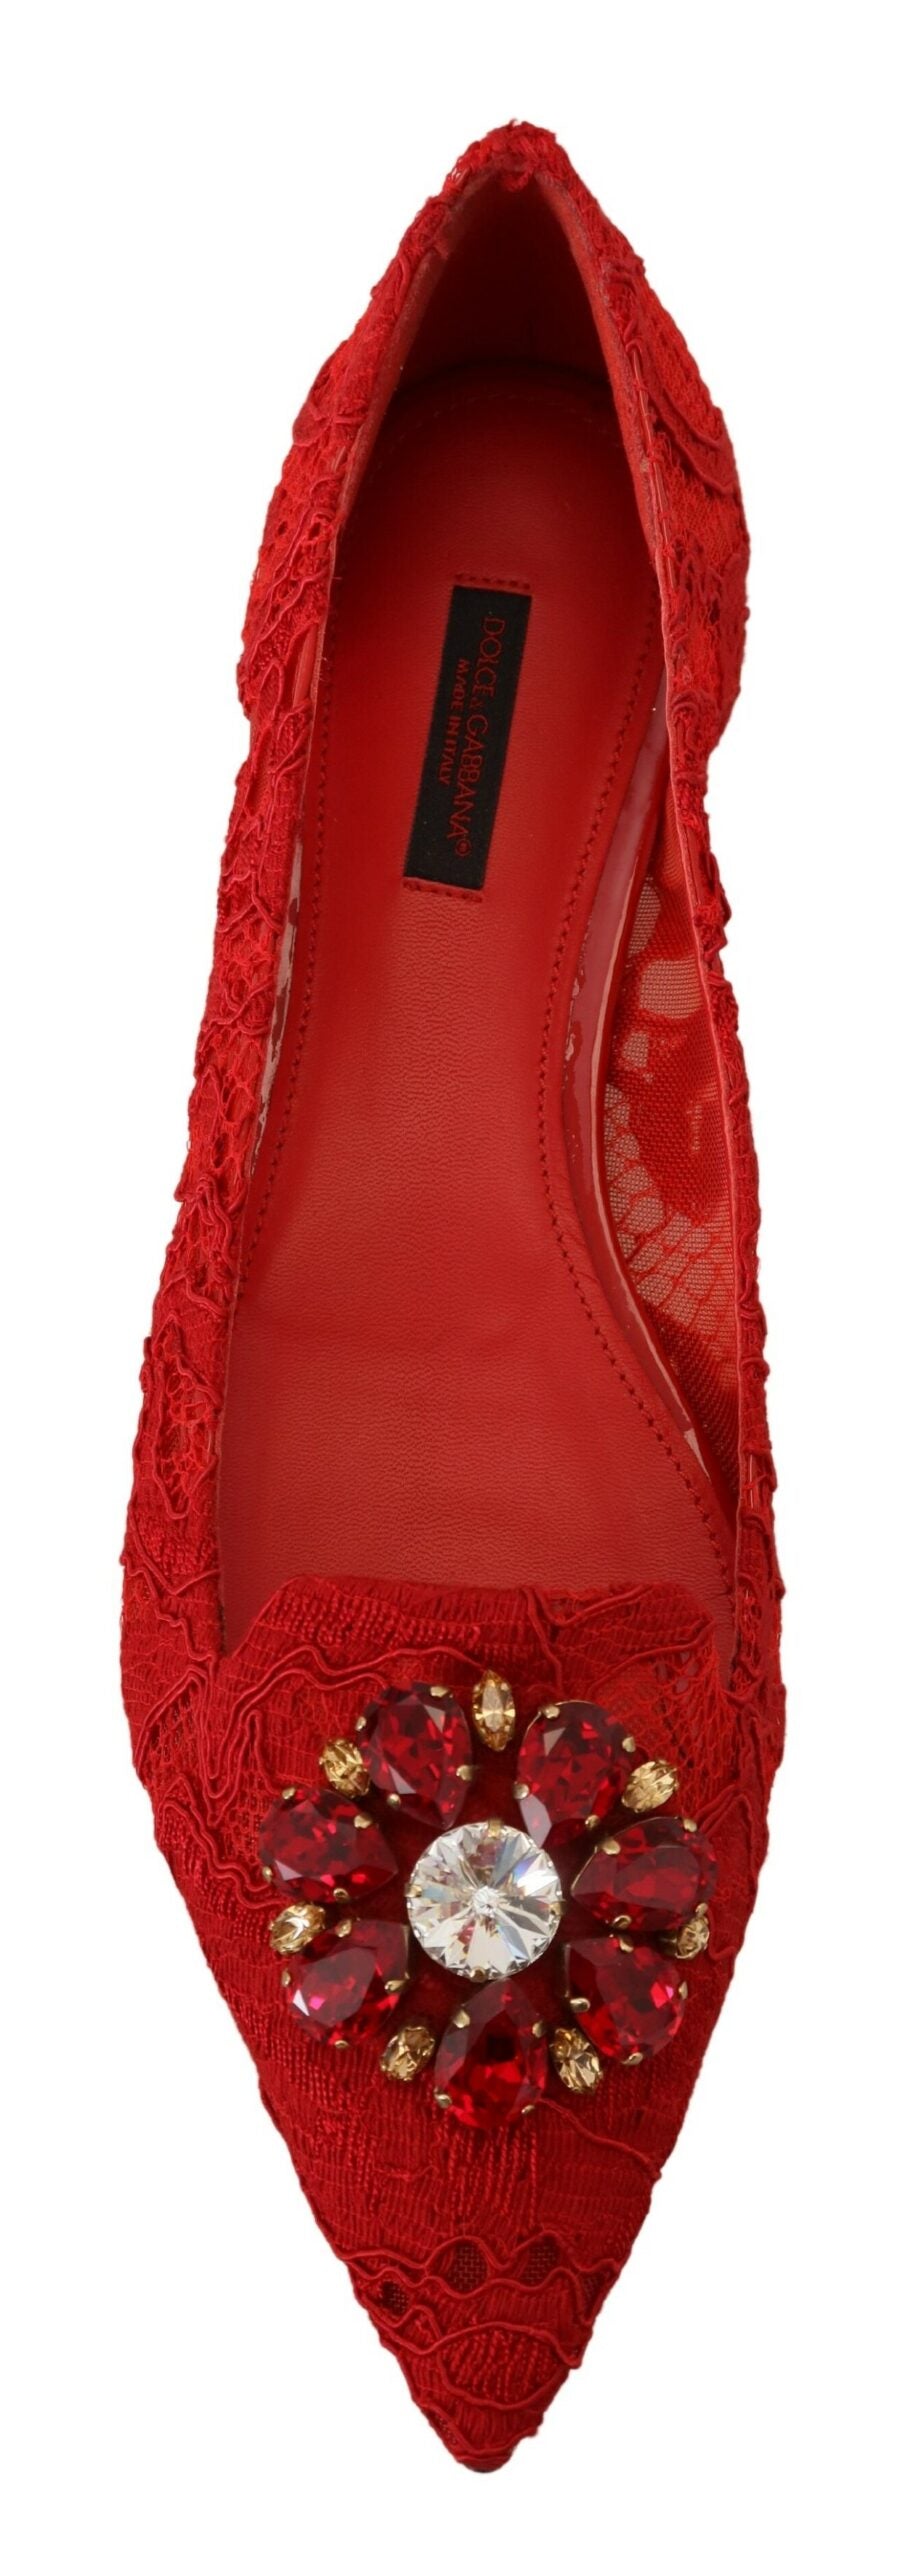 Dolce & Gabbana Red Crystal-Embellished Flats